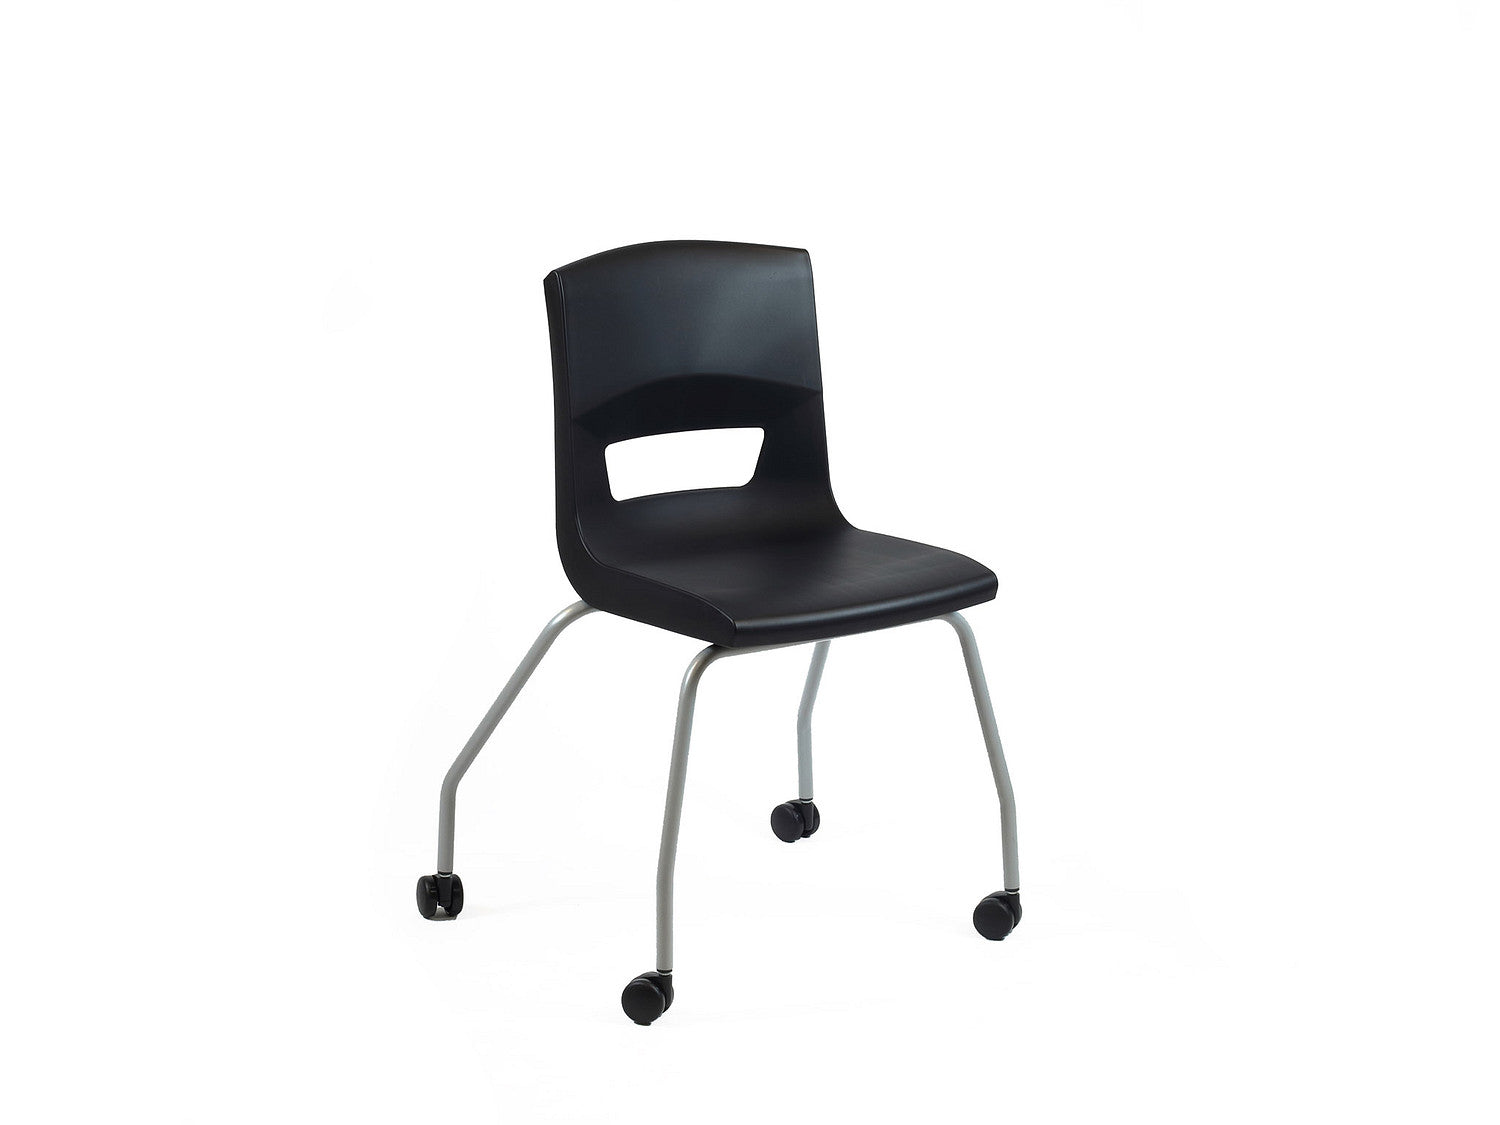 Postura 4 legs on castor unique stlye classroom chair silver balck